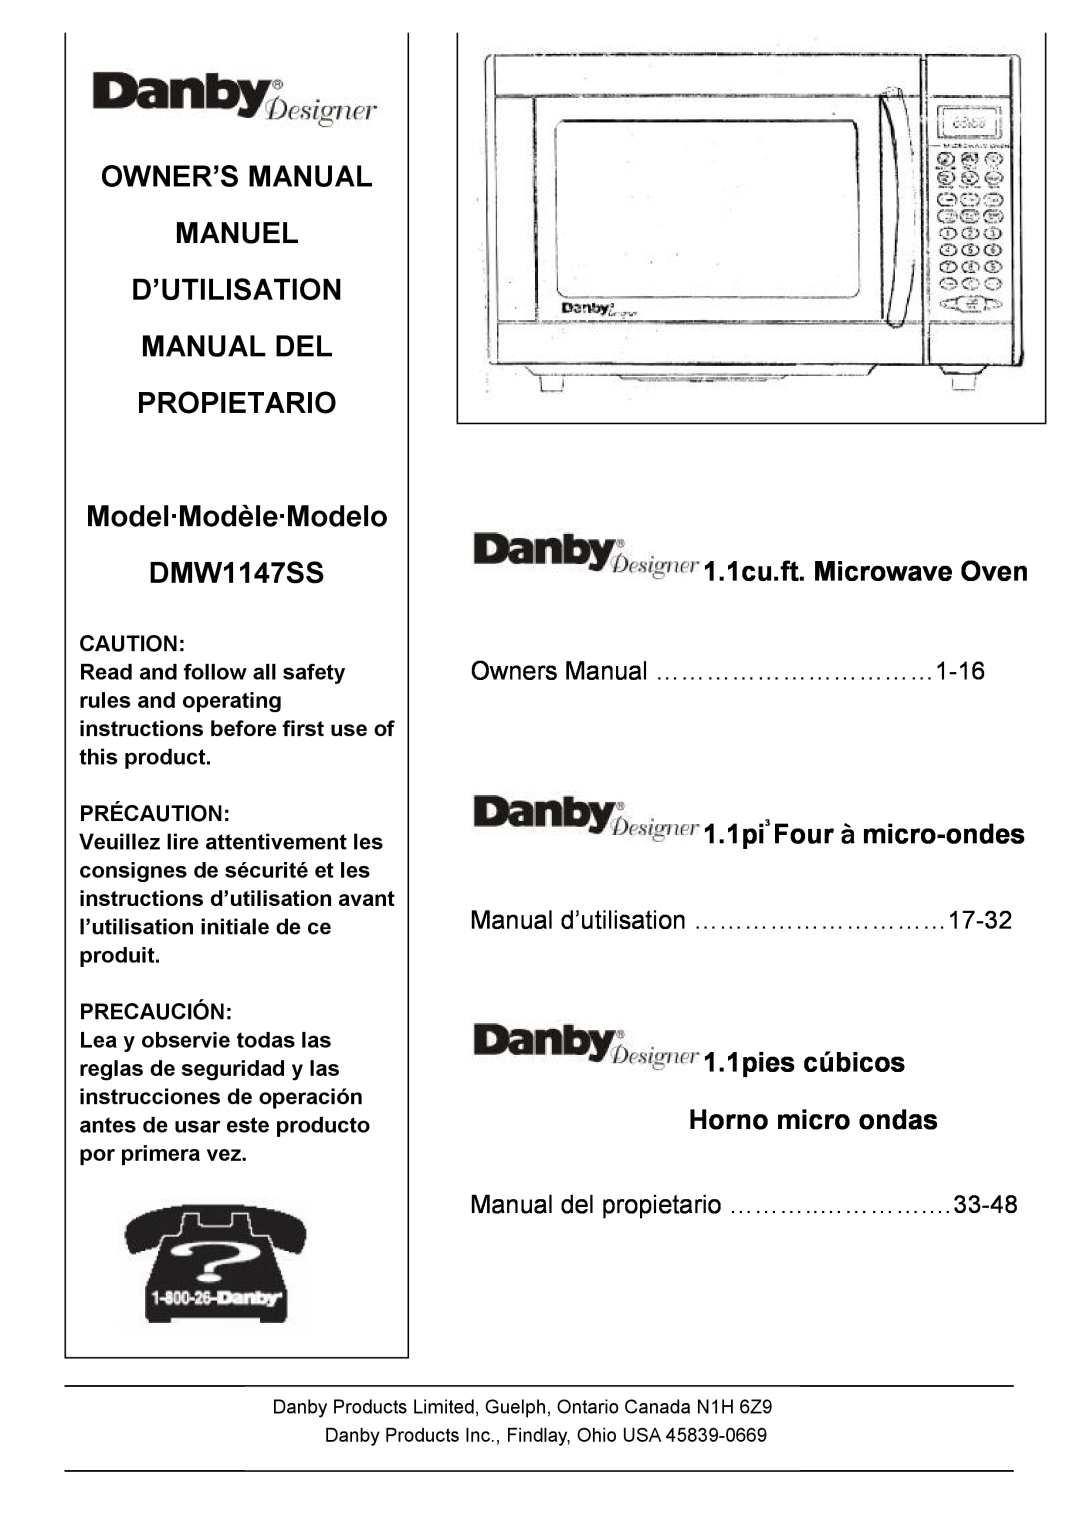 Danby owner manual Model·Modèle·Modelo DMW1147SS, Manual d’utilisation …………………………17-32, 1.1cu.ft. Microwave Oven 